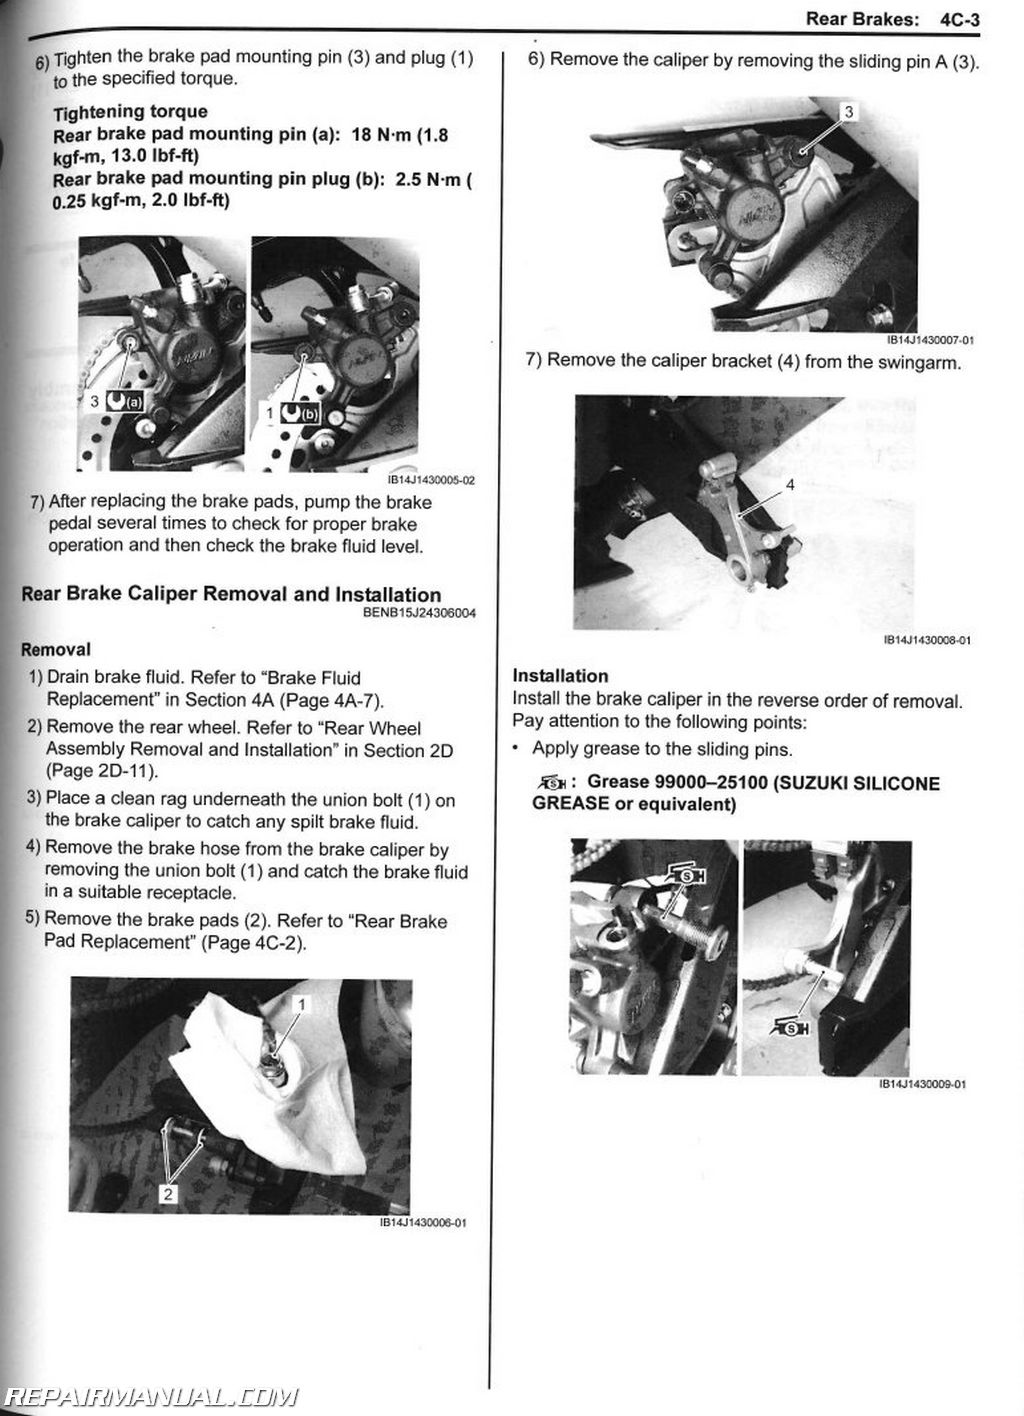 Suzuki motorcycle repair manuals pdf